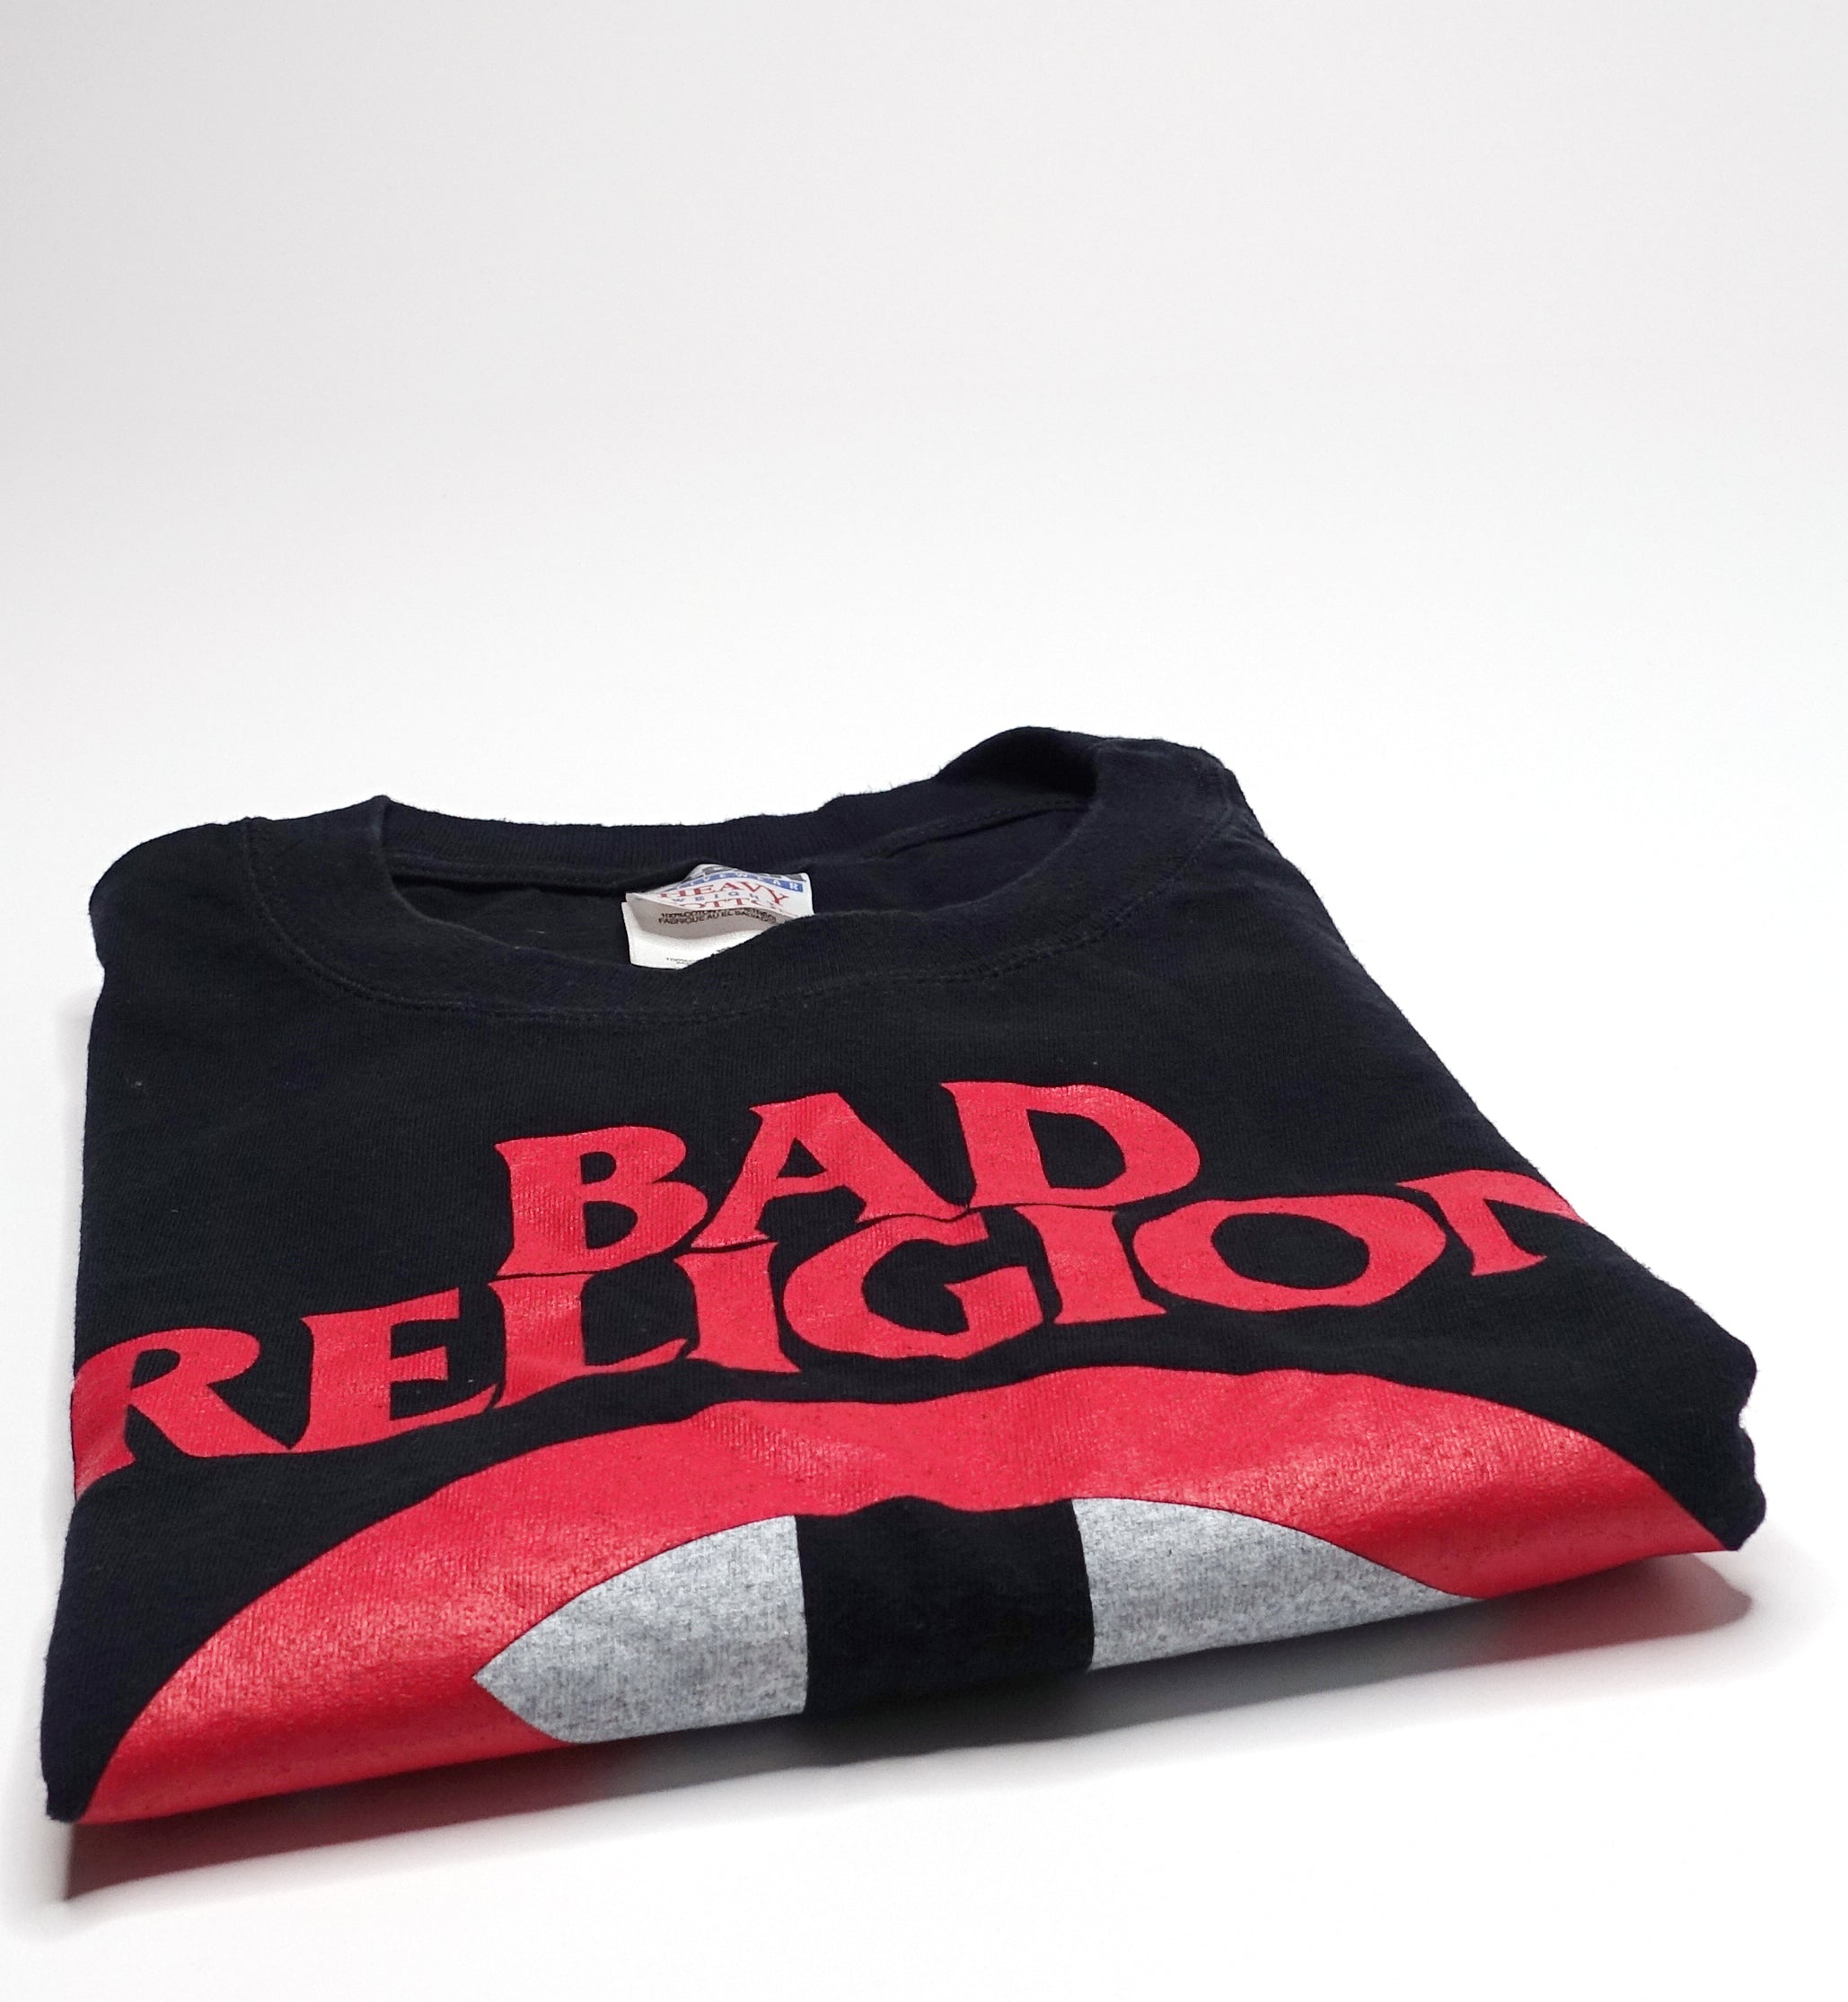 Bad Religion - Cross Buster Butt Print Tour Shirt Size XL